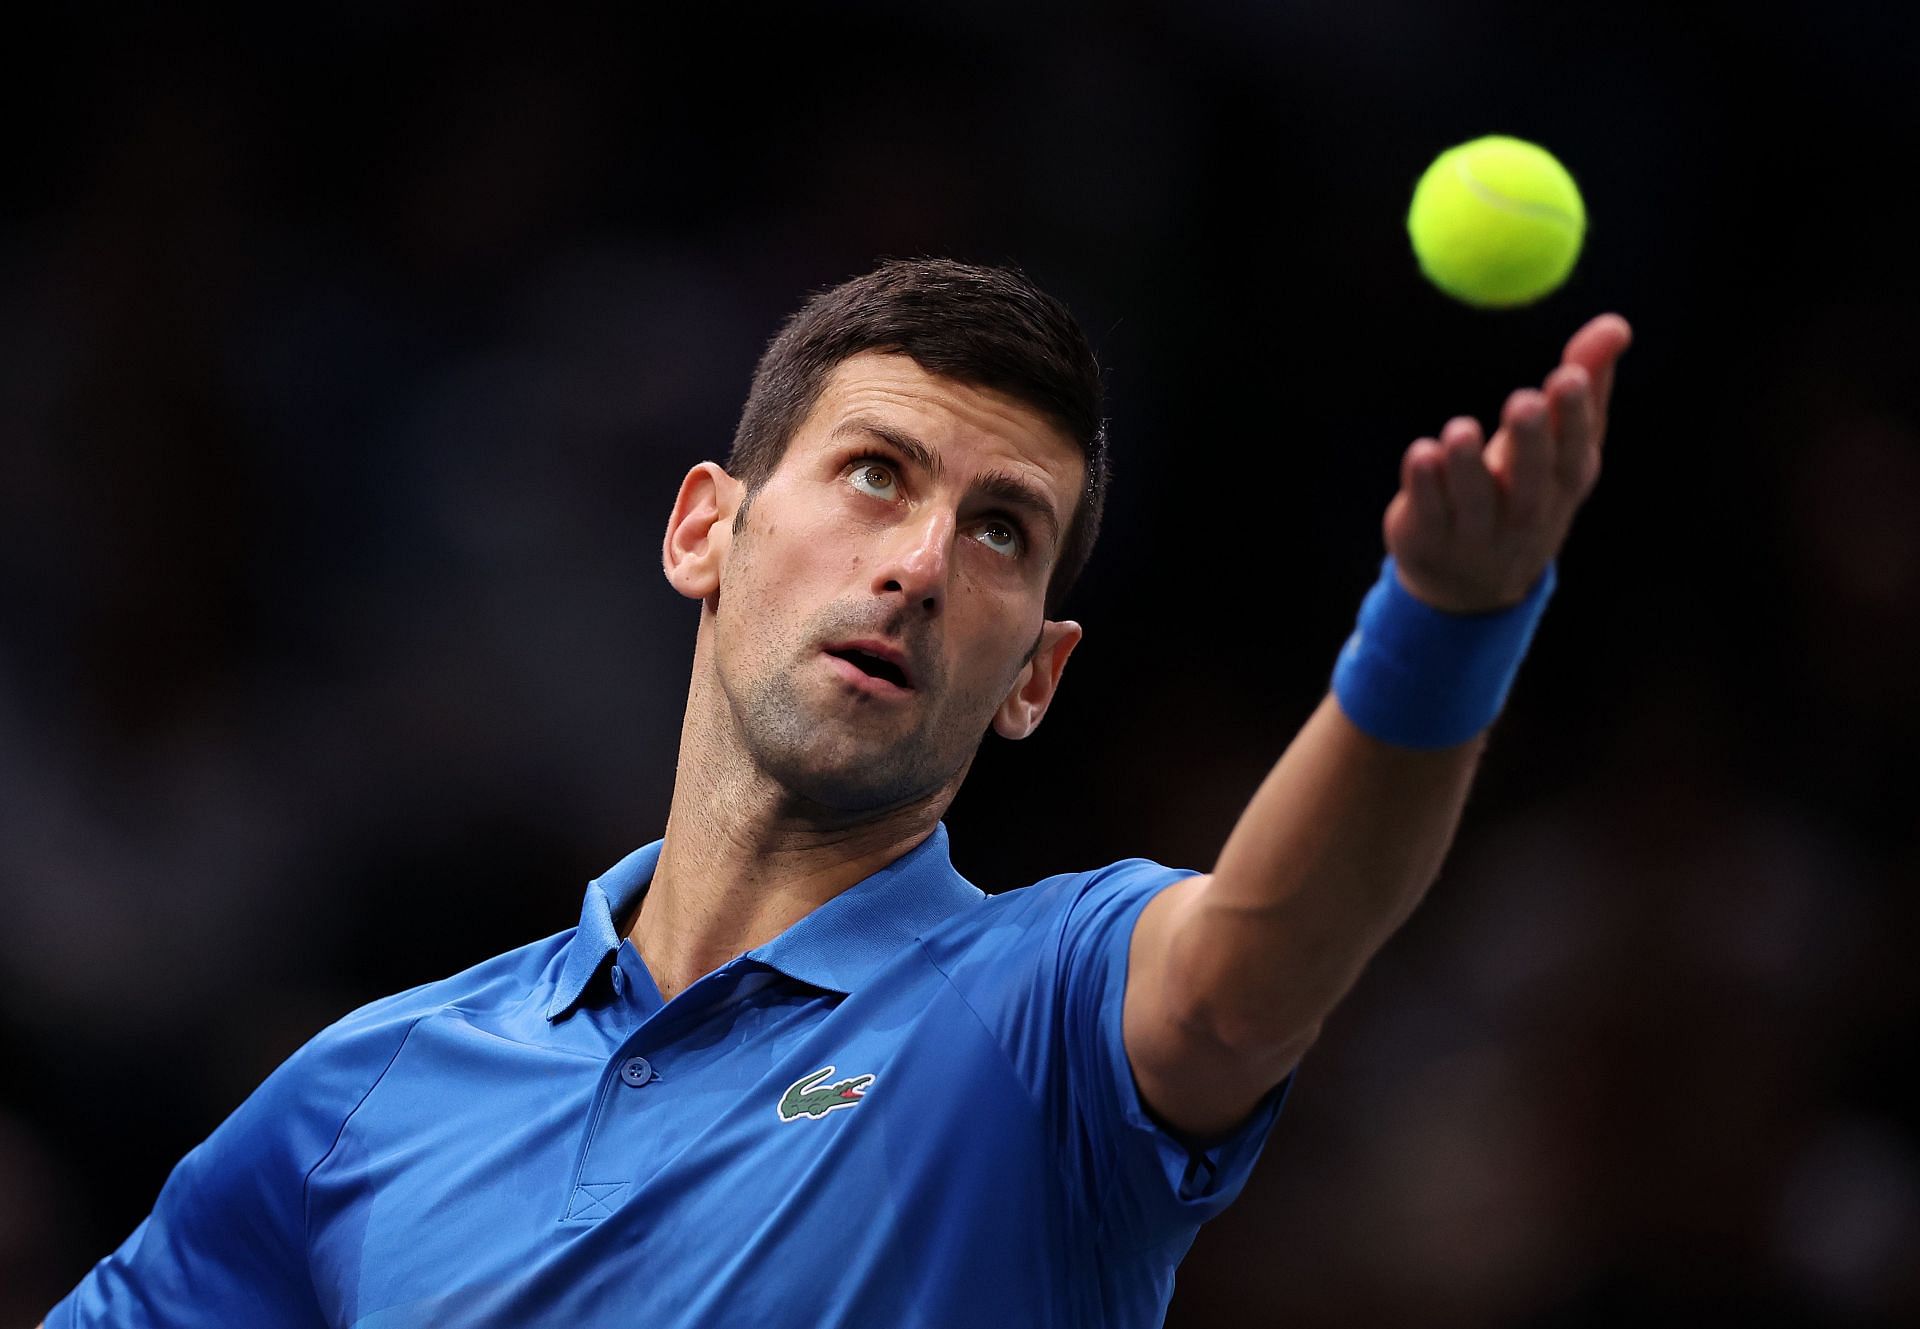 Novak Djokovic in action at the Paris Masters